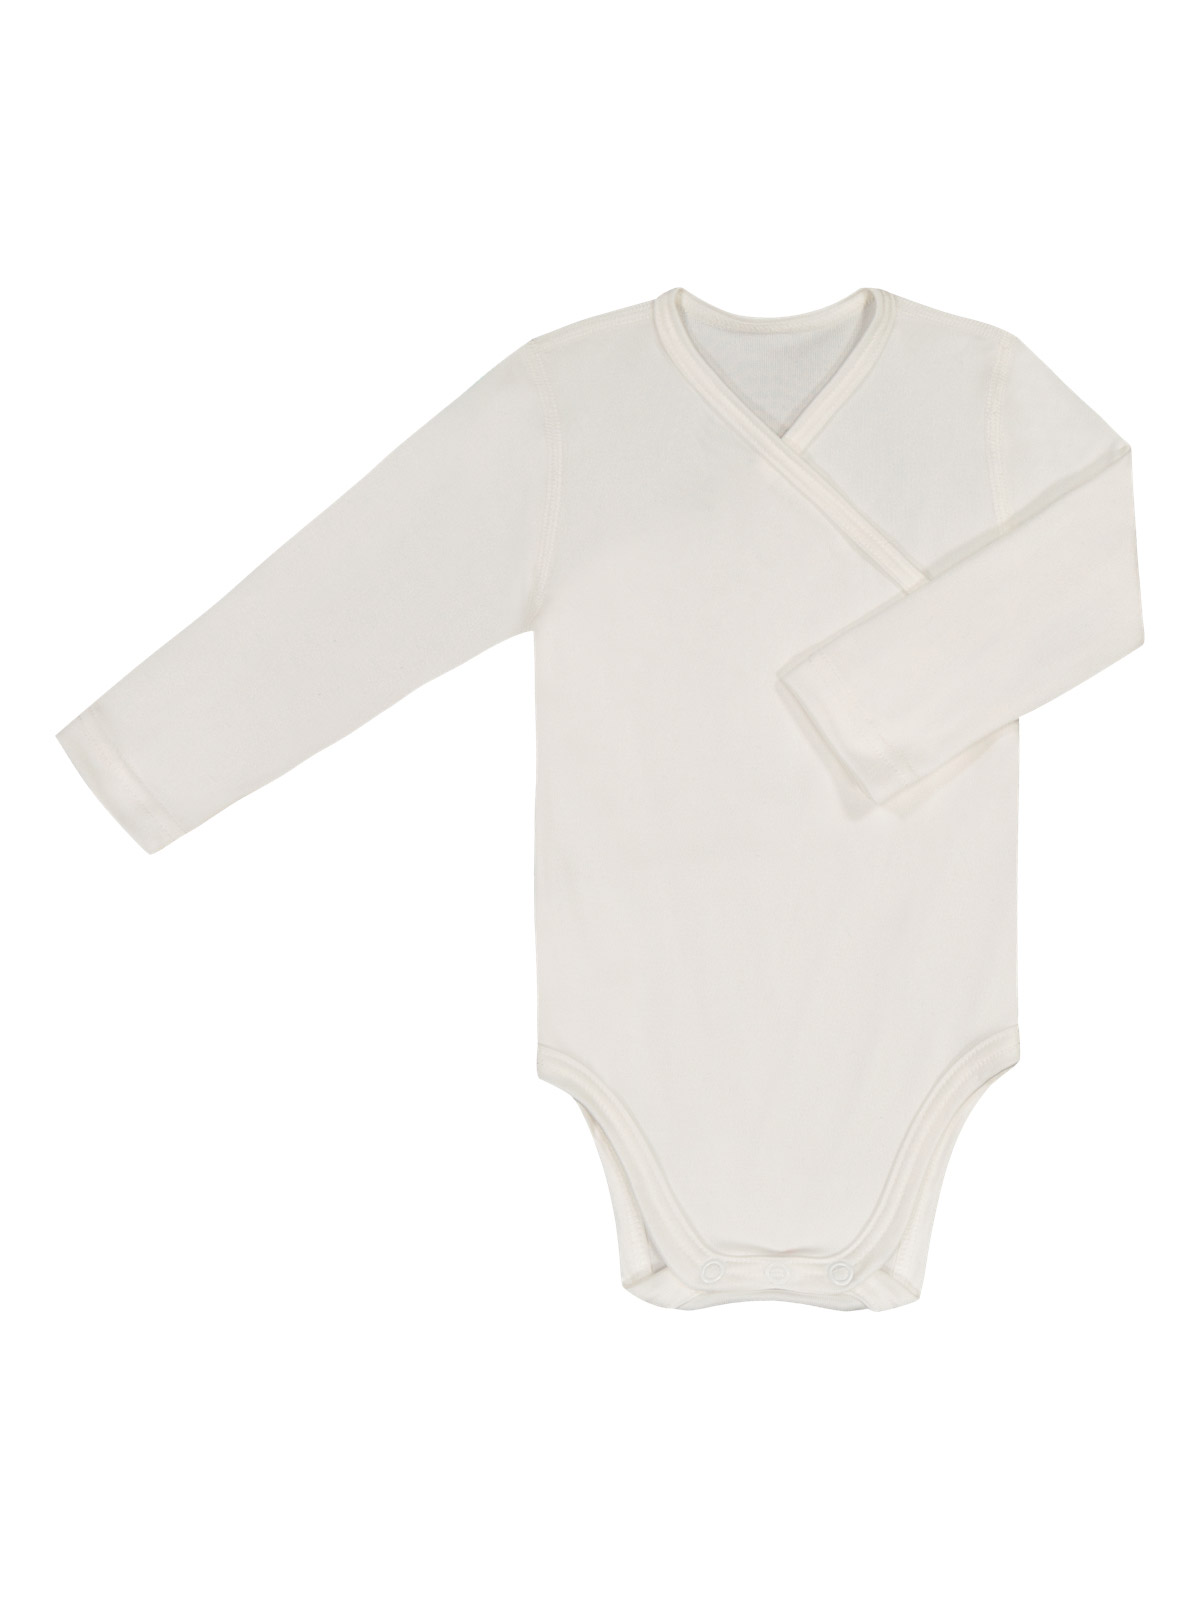 Ruskovilla's silk body for babies